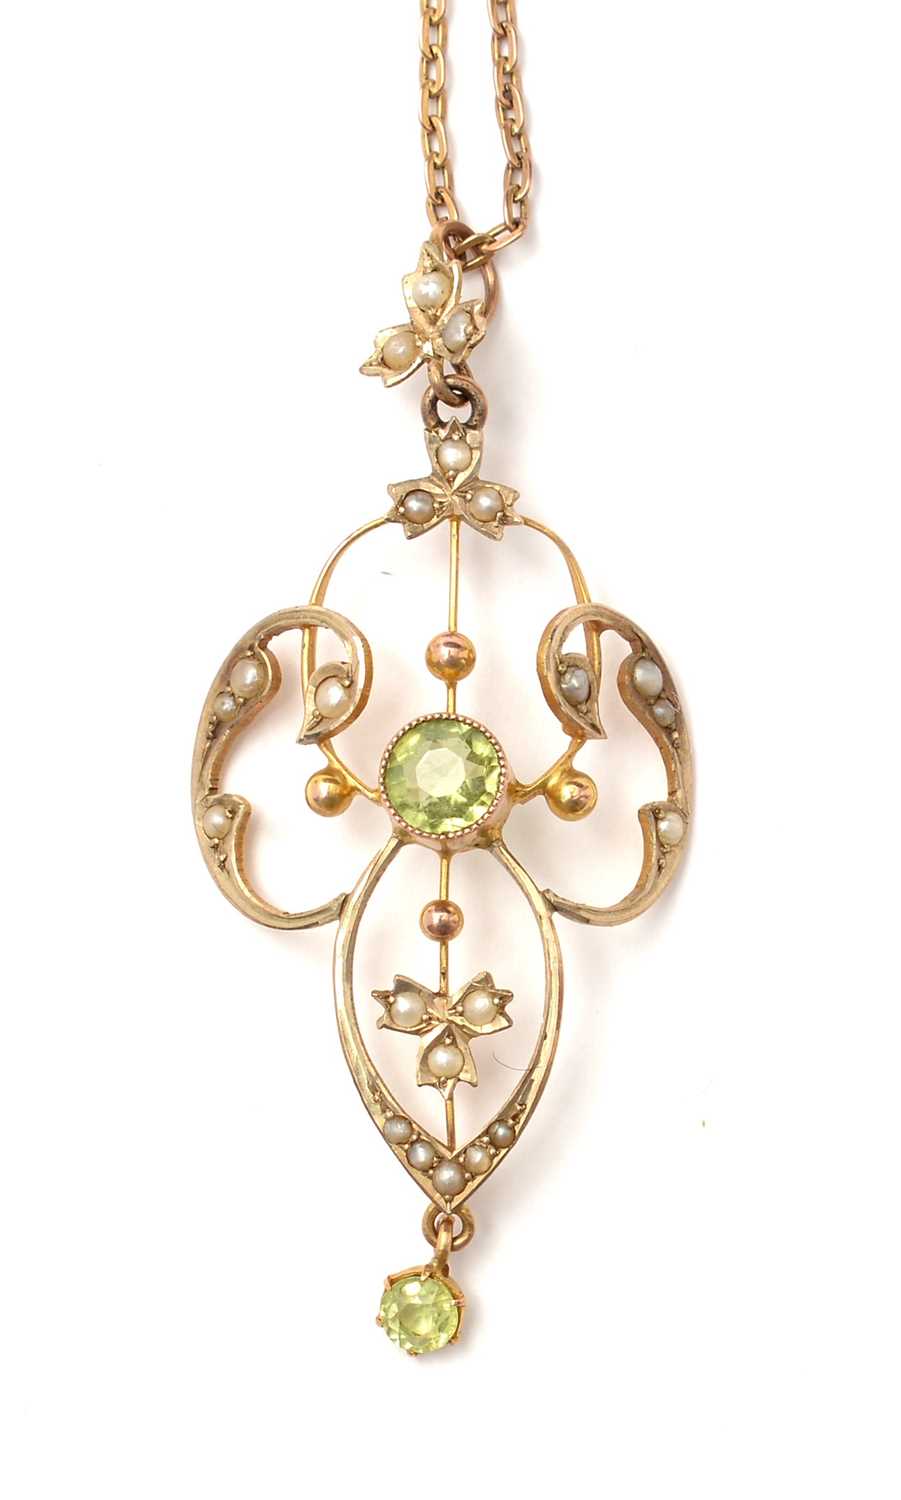 Lot 115 - An Edwardian Art Nouveau peridot and pearl pendant.